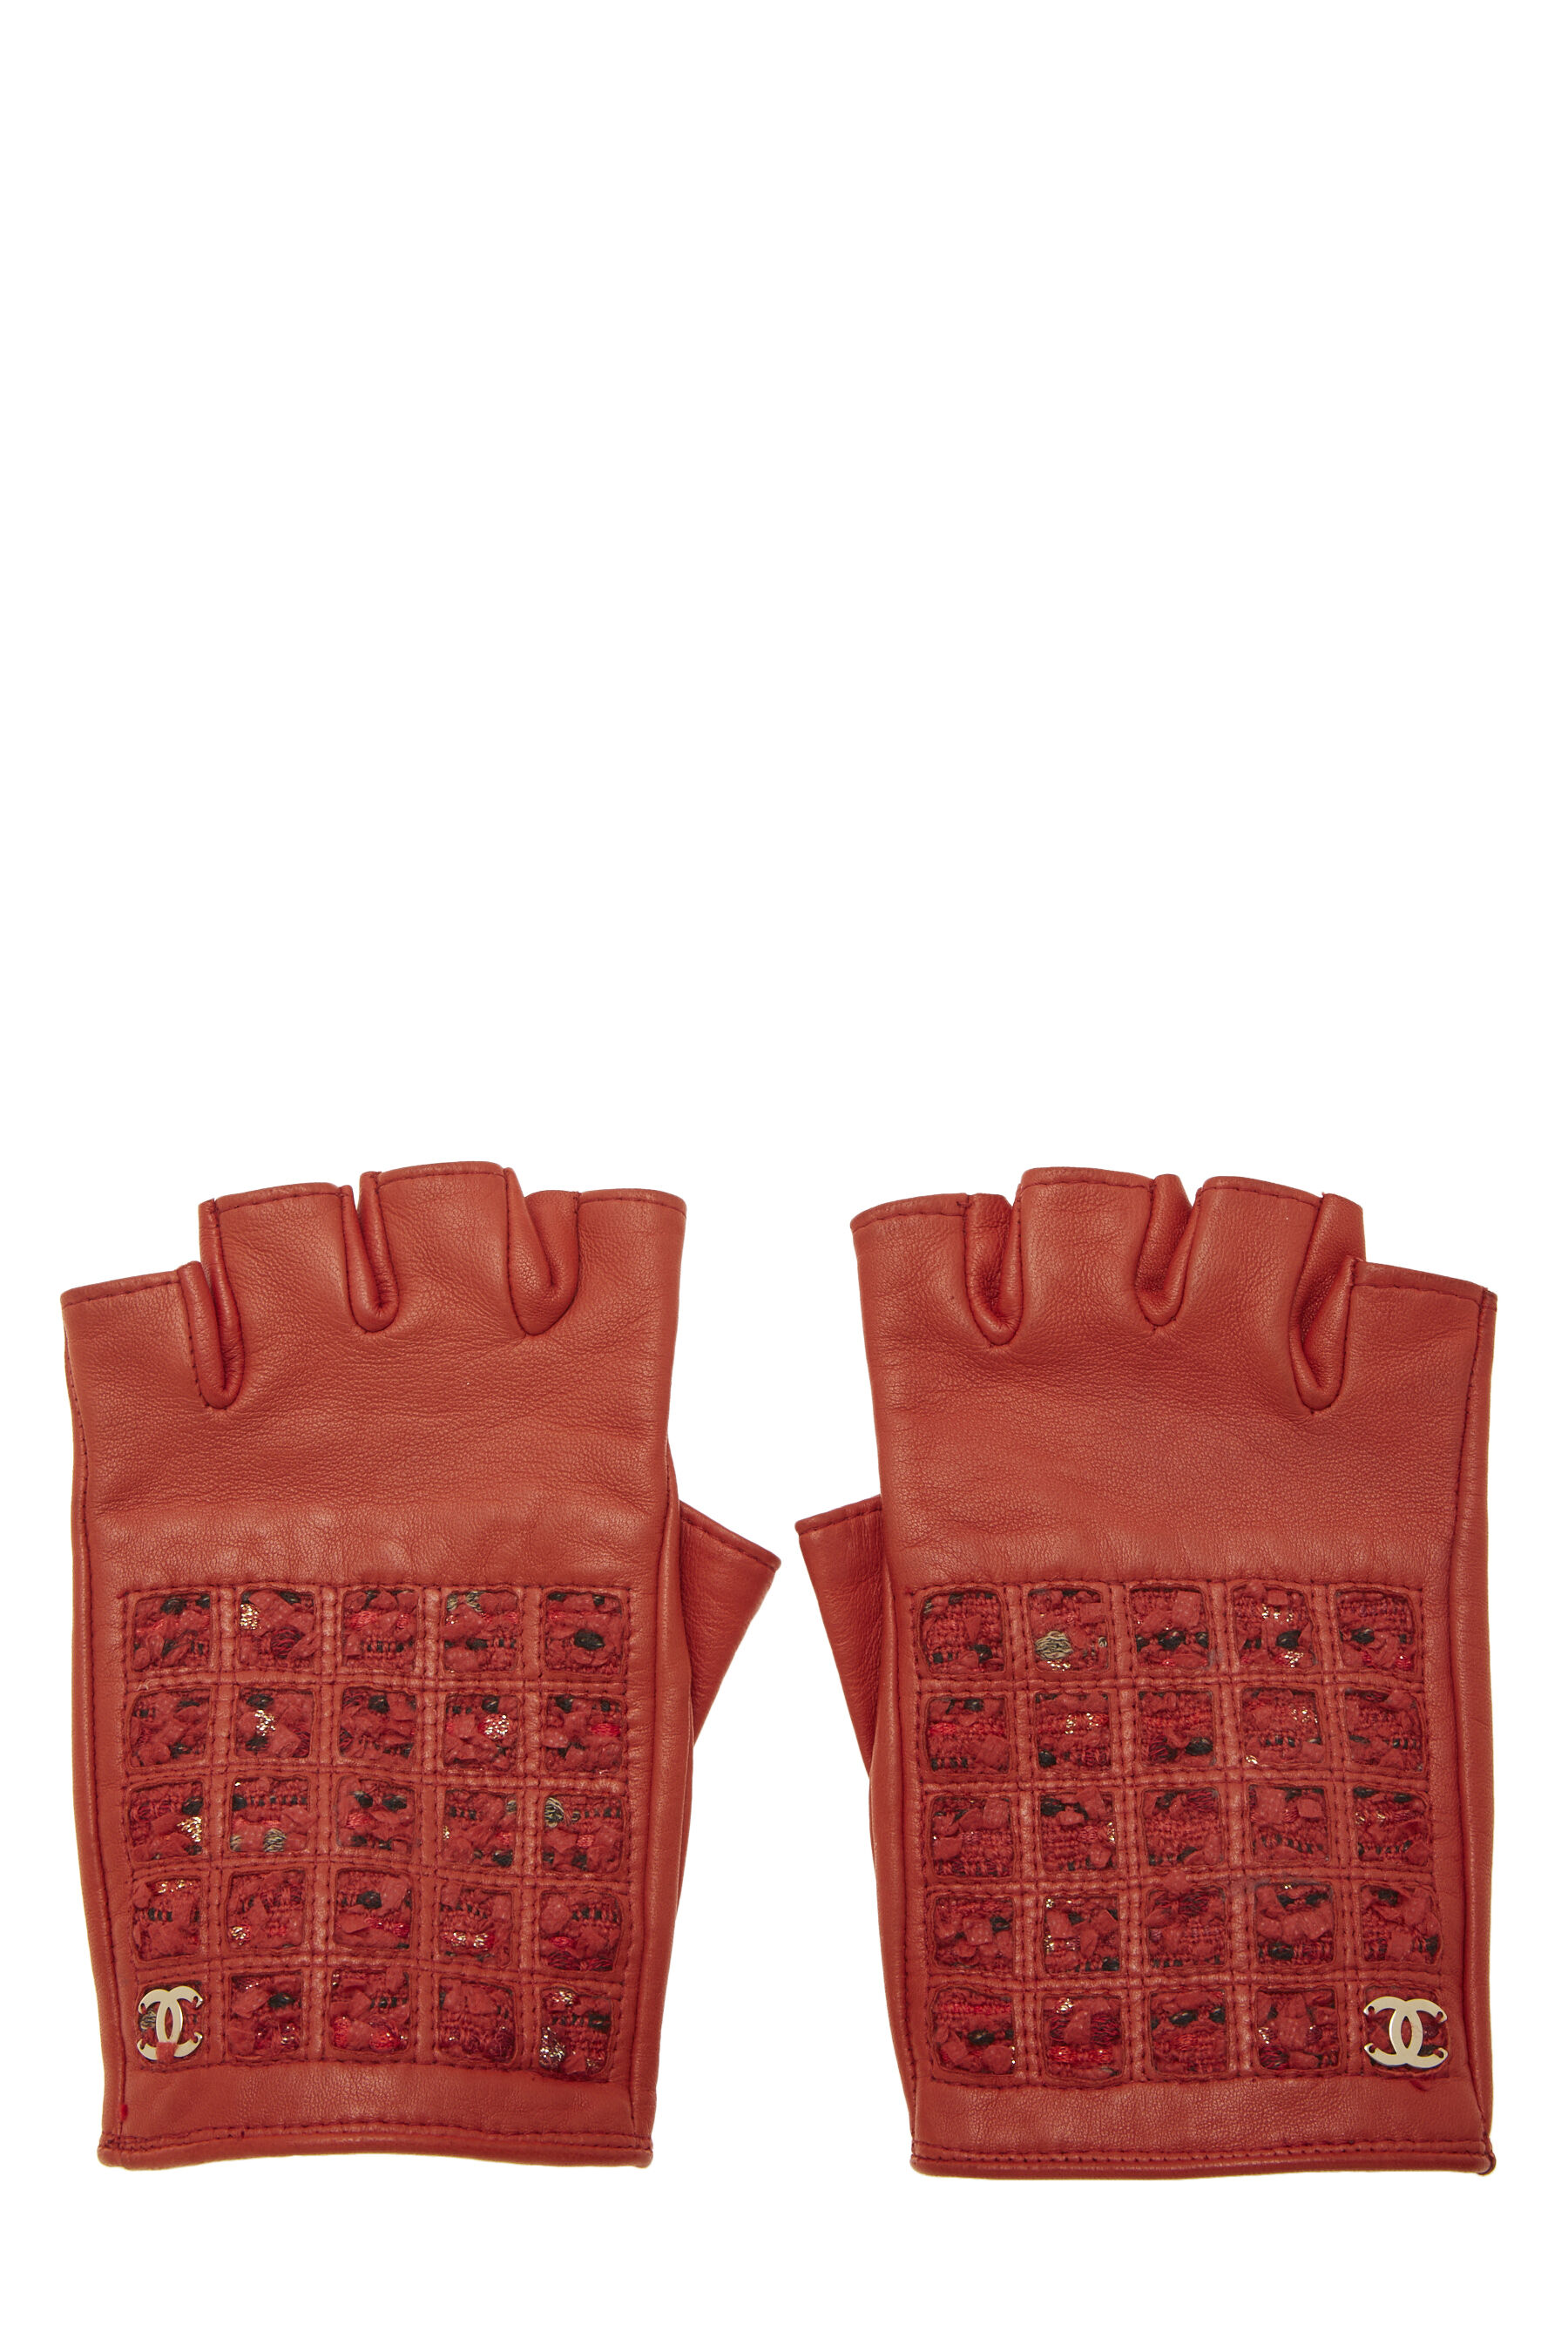 CHANEL Gloves (AA9267 B13374 NP729)